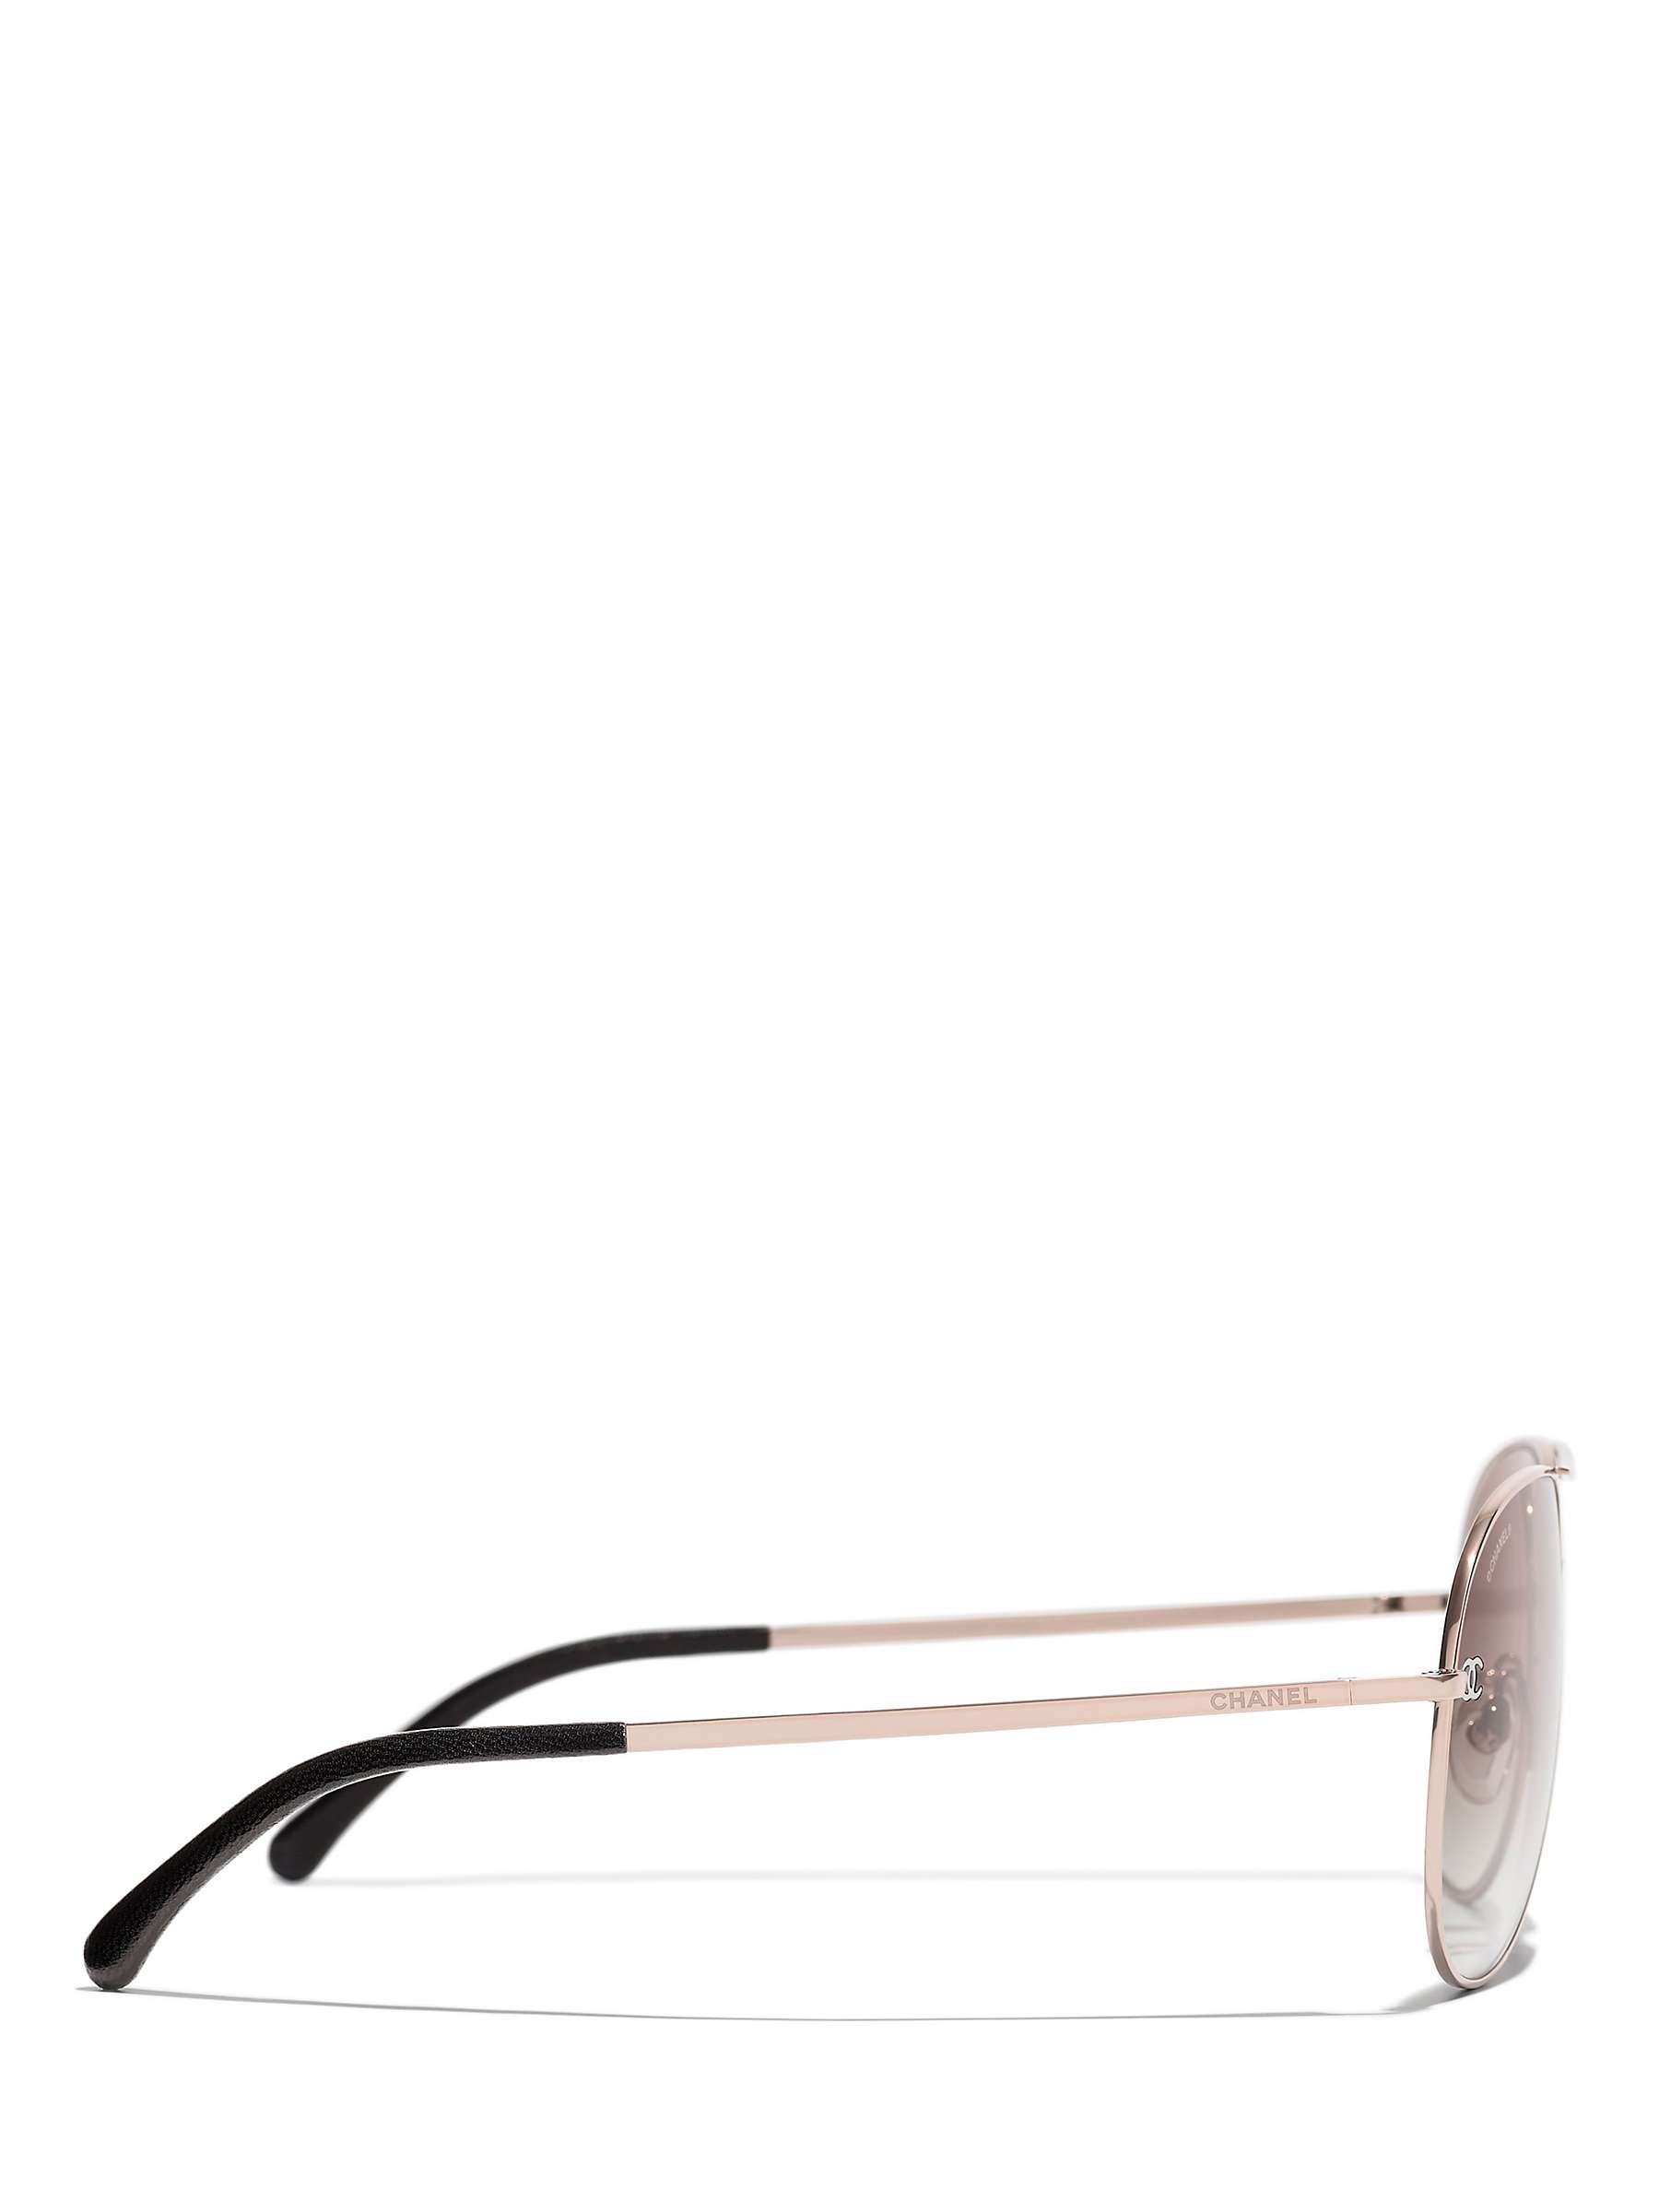 Buy CHANEL Pilot Sunglasses CH4189TQ Rose Gold/Beige Gradient Online at johnlewis.com